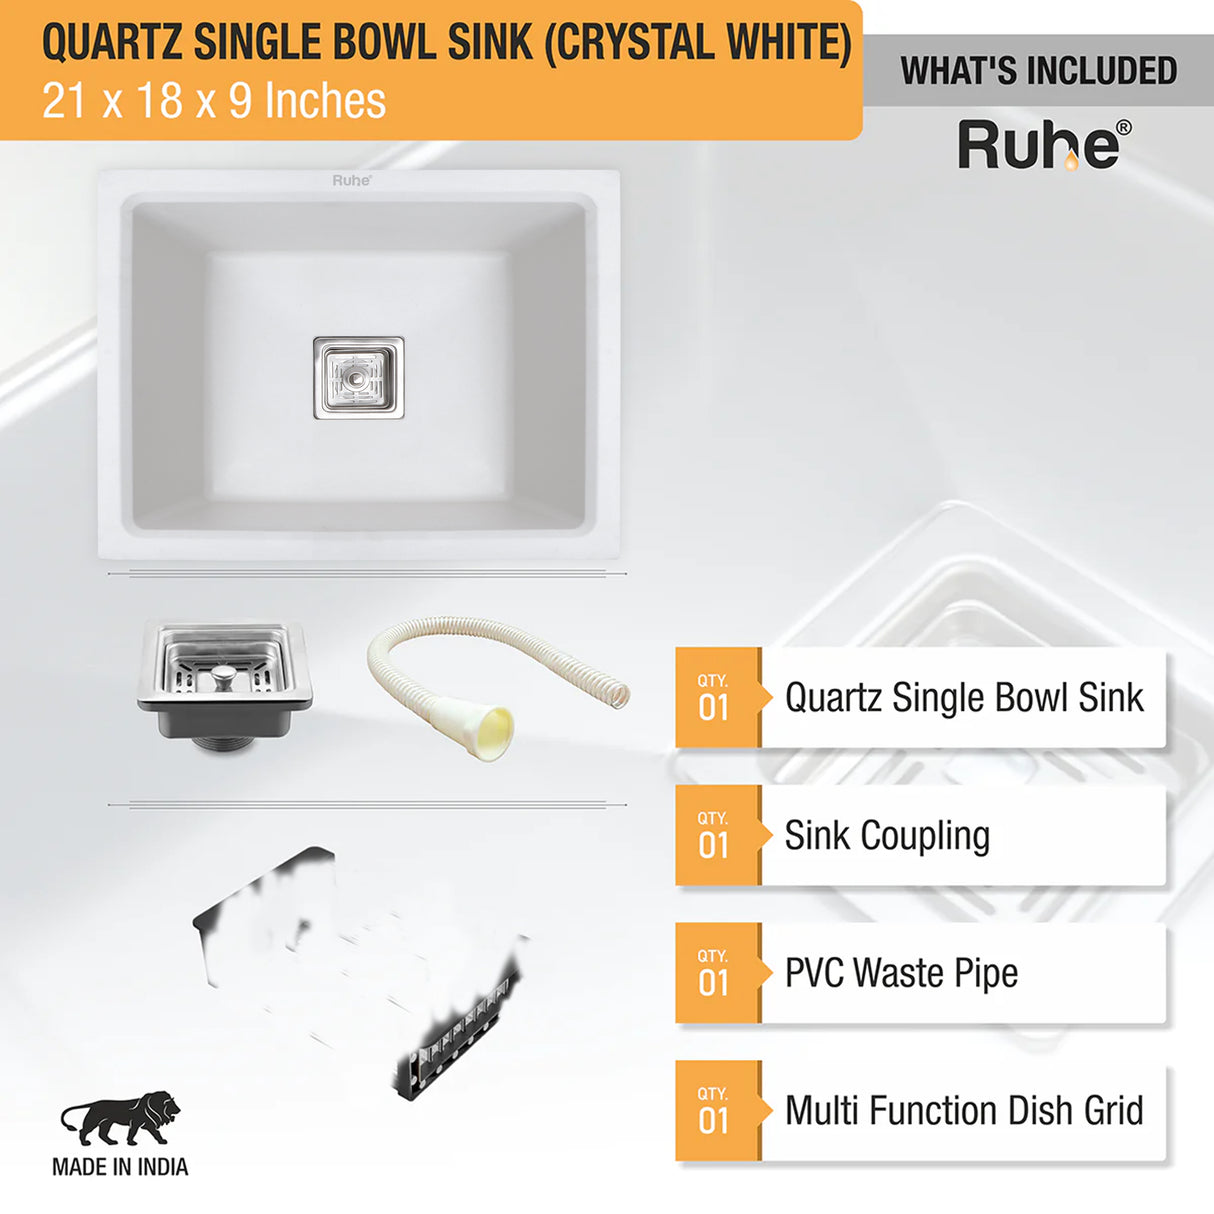 Quartz Single Bowl Kitchen Sink - Crystal White (21 x 18 x 9 inches) - by Ruhe®